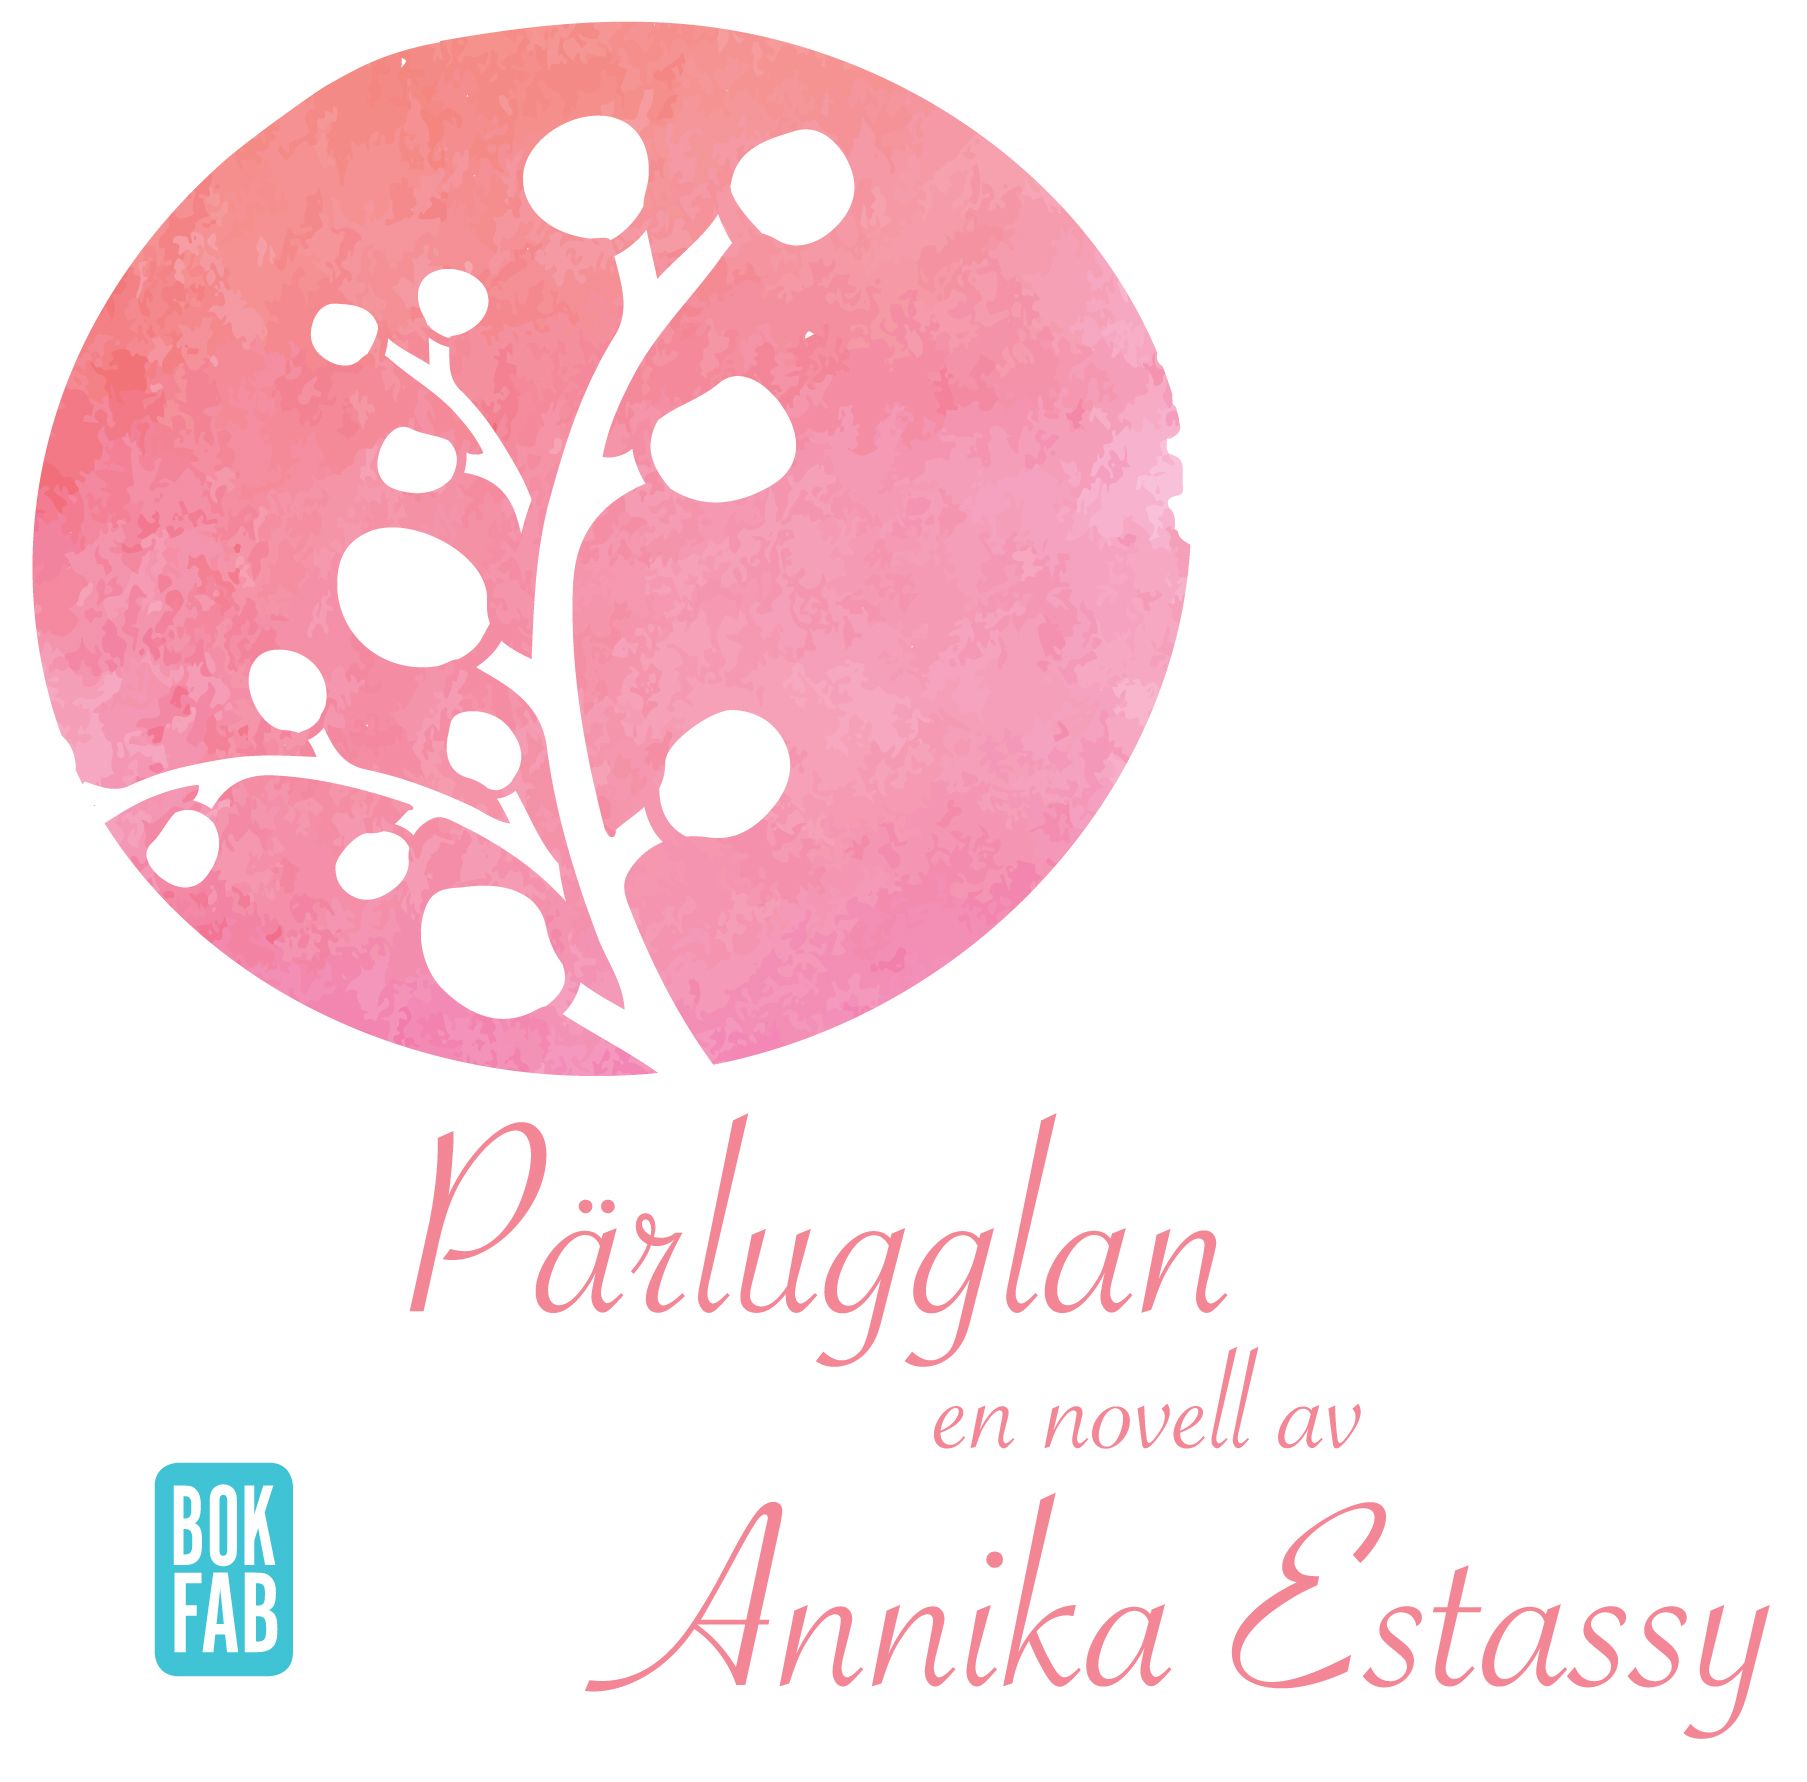 Pärlugglan, audiobook by Annika Estassy